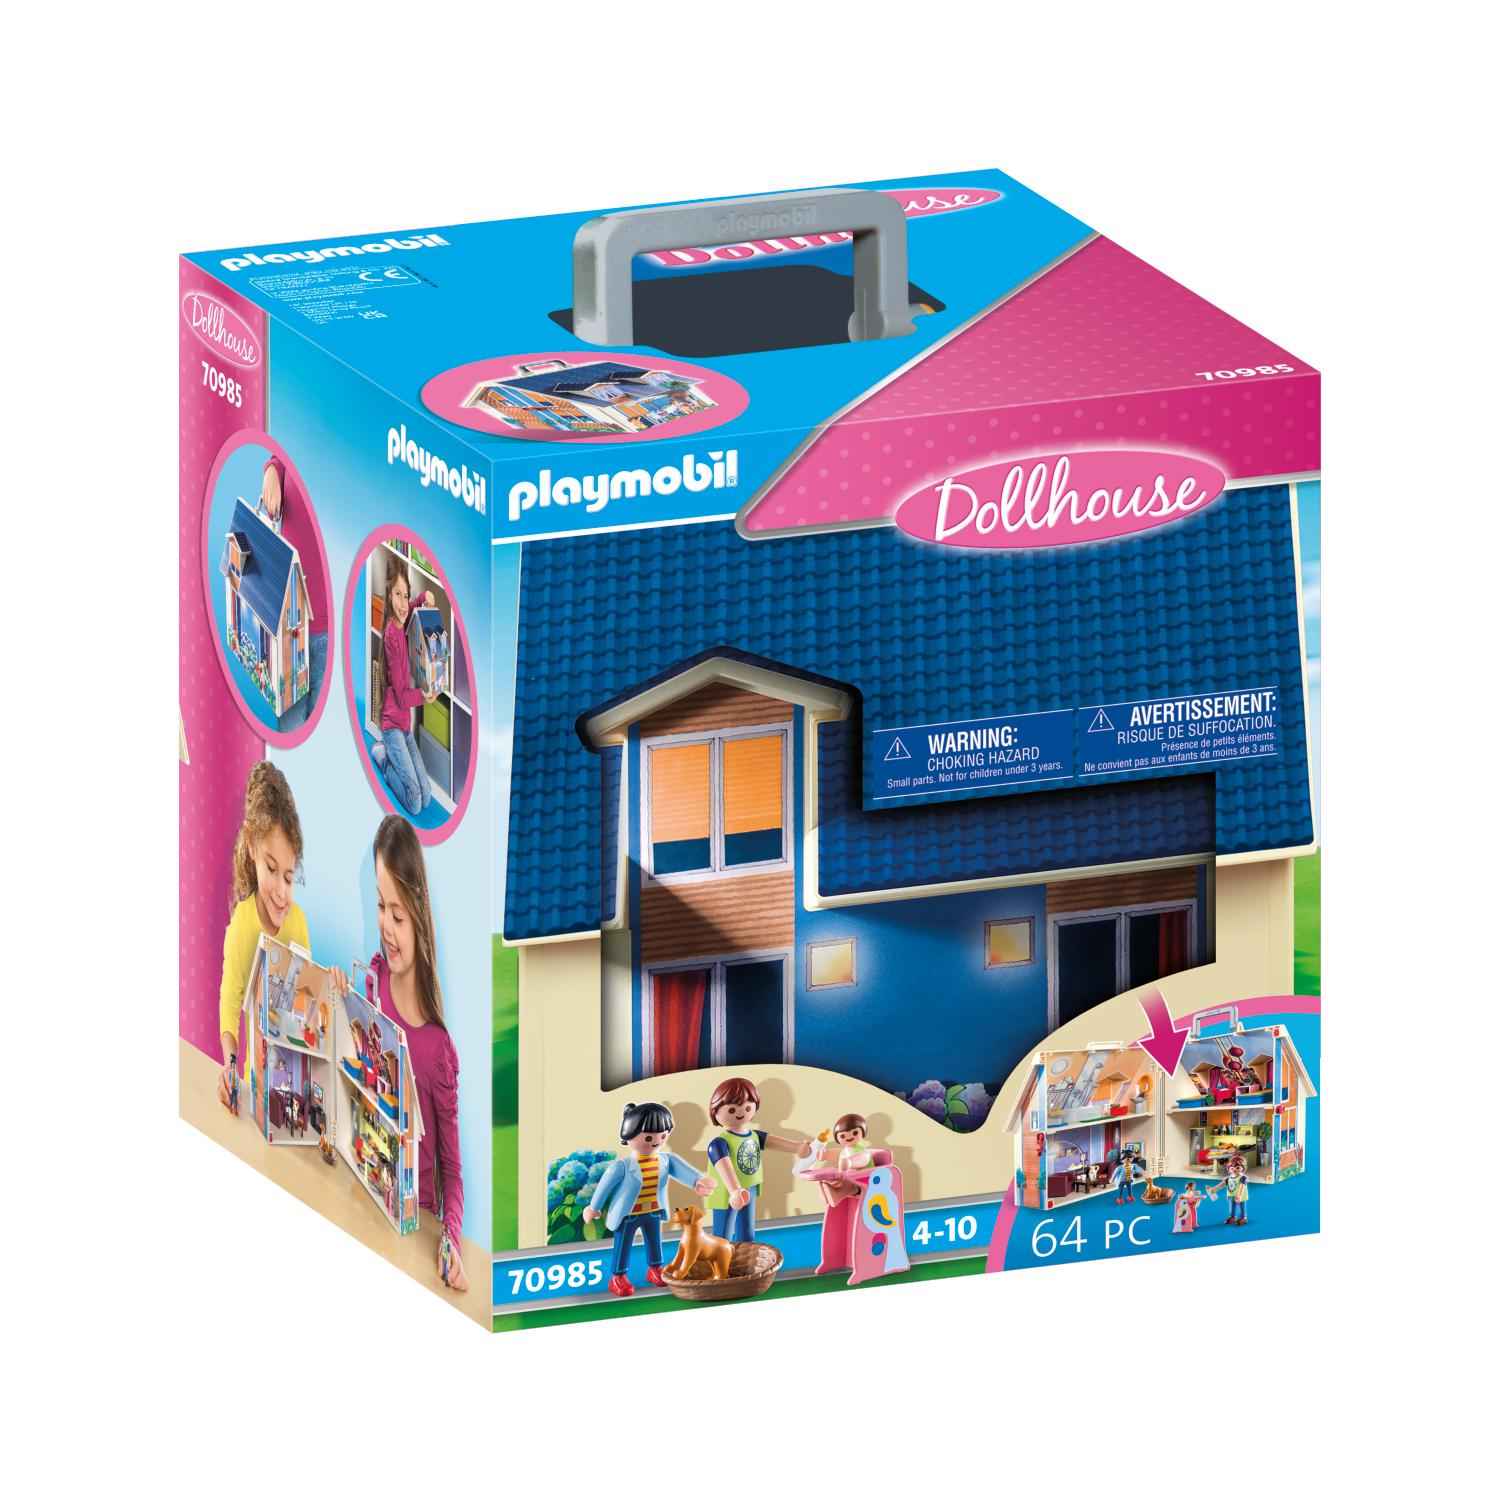 Playmobil Dollhouse Μοντέρνο Κουκλόσπιτο-βαλιτσάκι 70985 - Playmobil, Playmobil Dollhouse